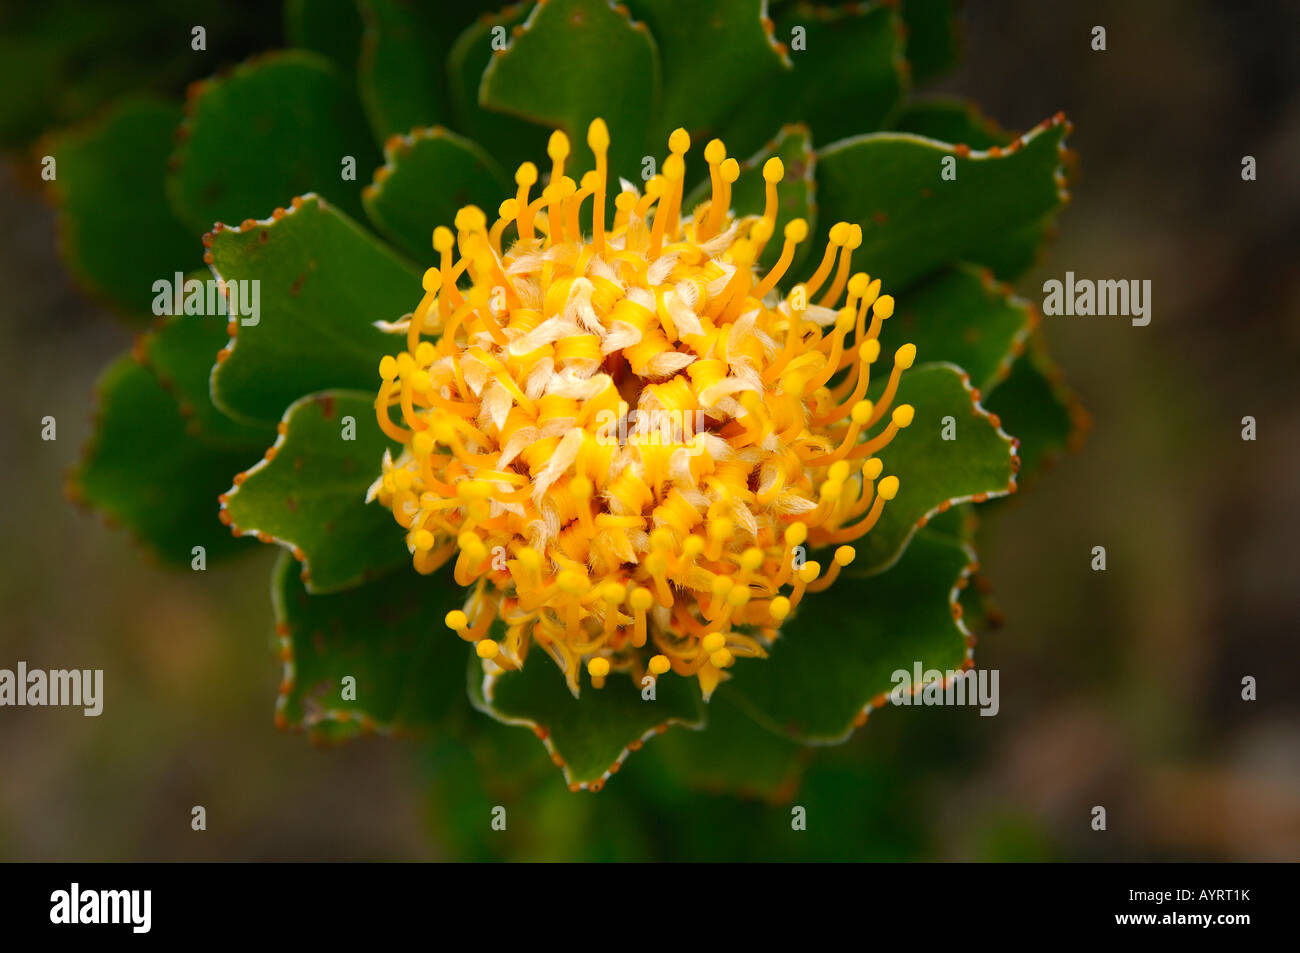 Flowering sugarbush, Protea, South Africa Stock Photo